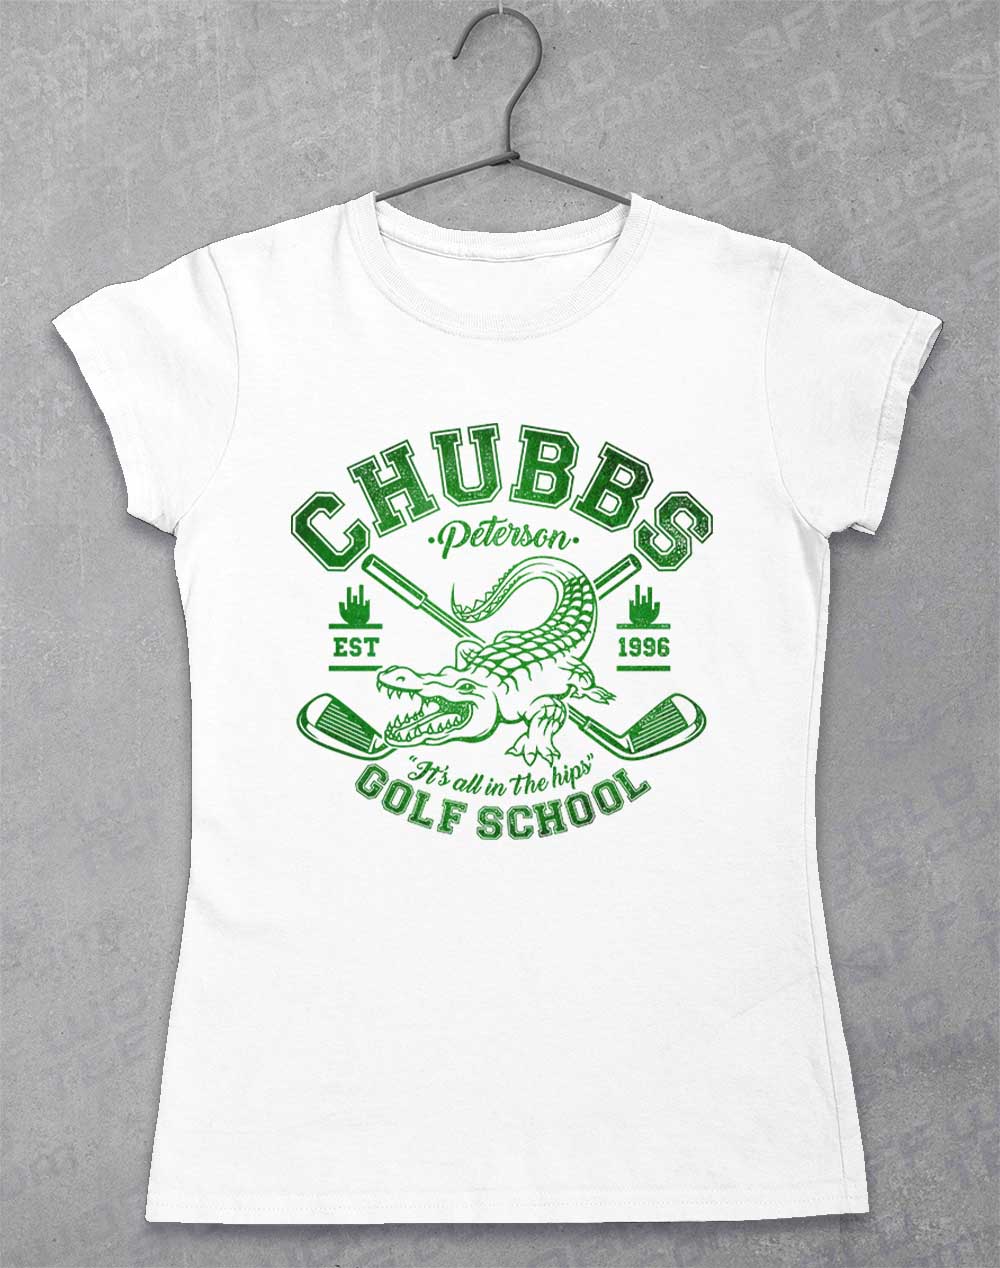 White - Chubb's Golf School 1996 Women's T-Shirt